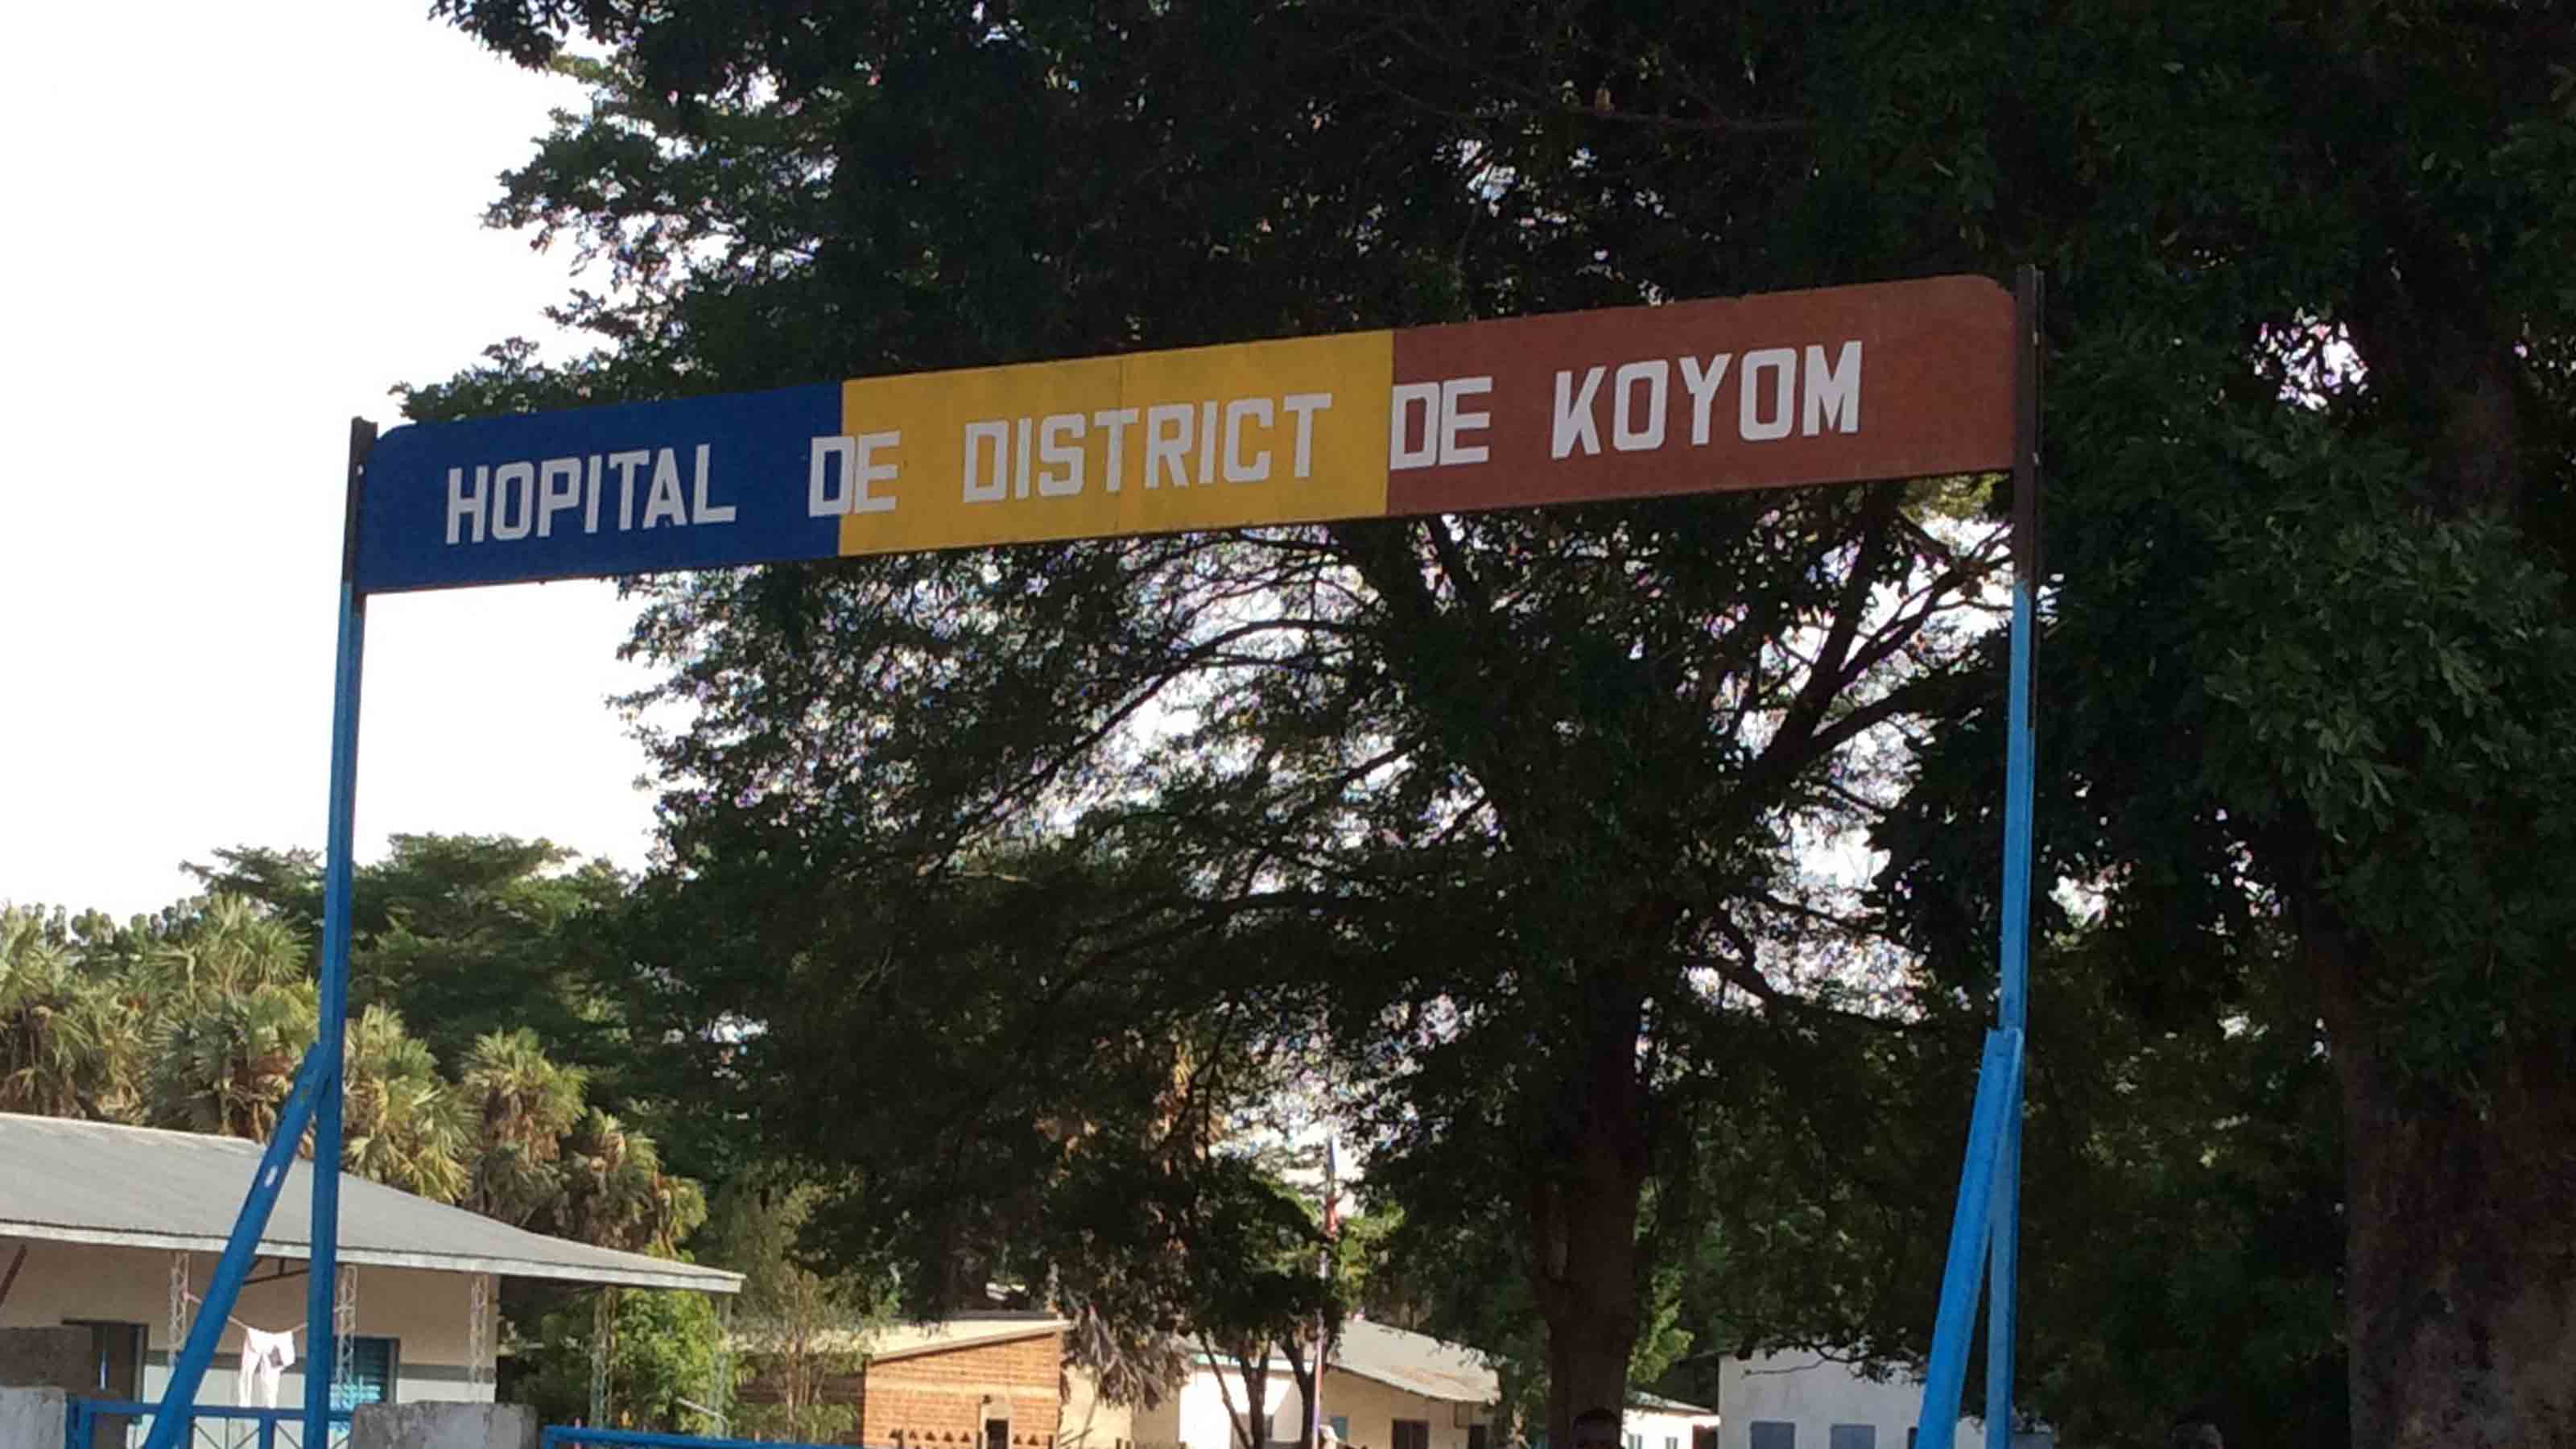 Entrance of hospital in Koyom